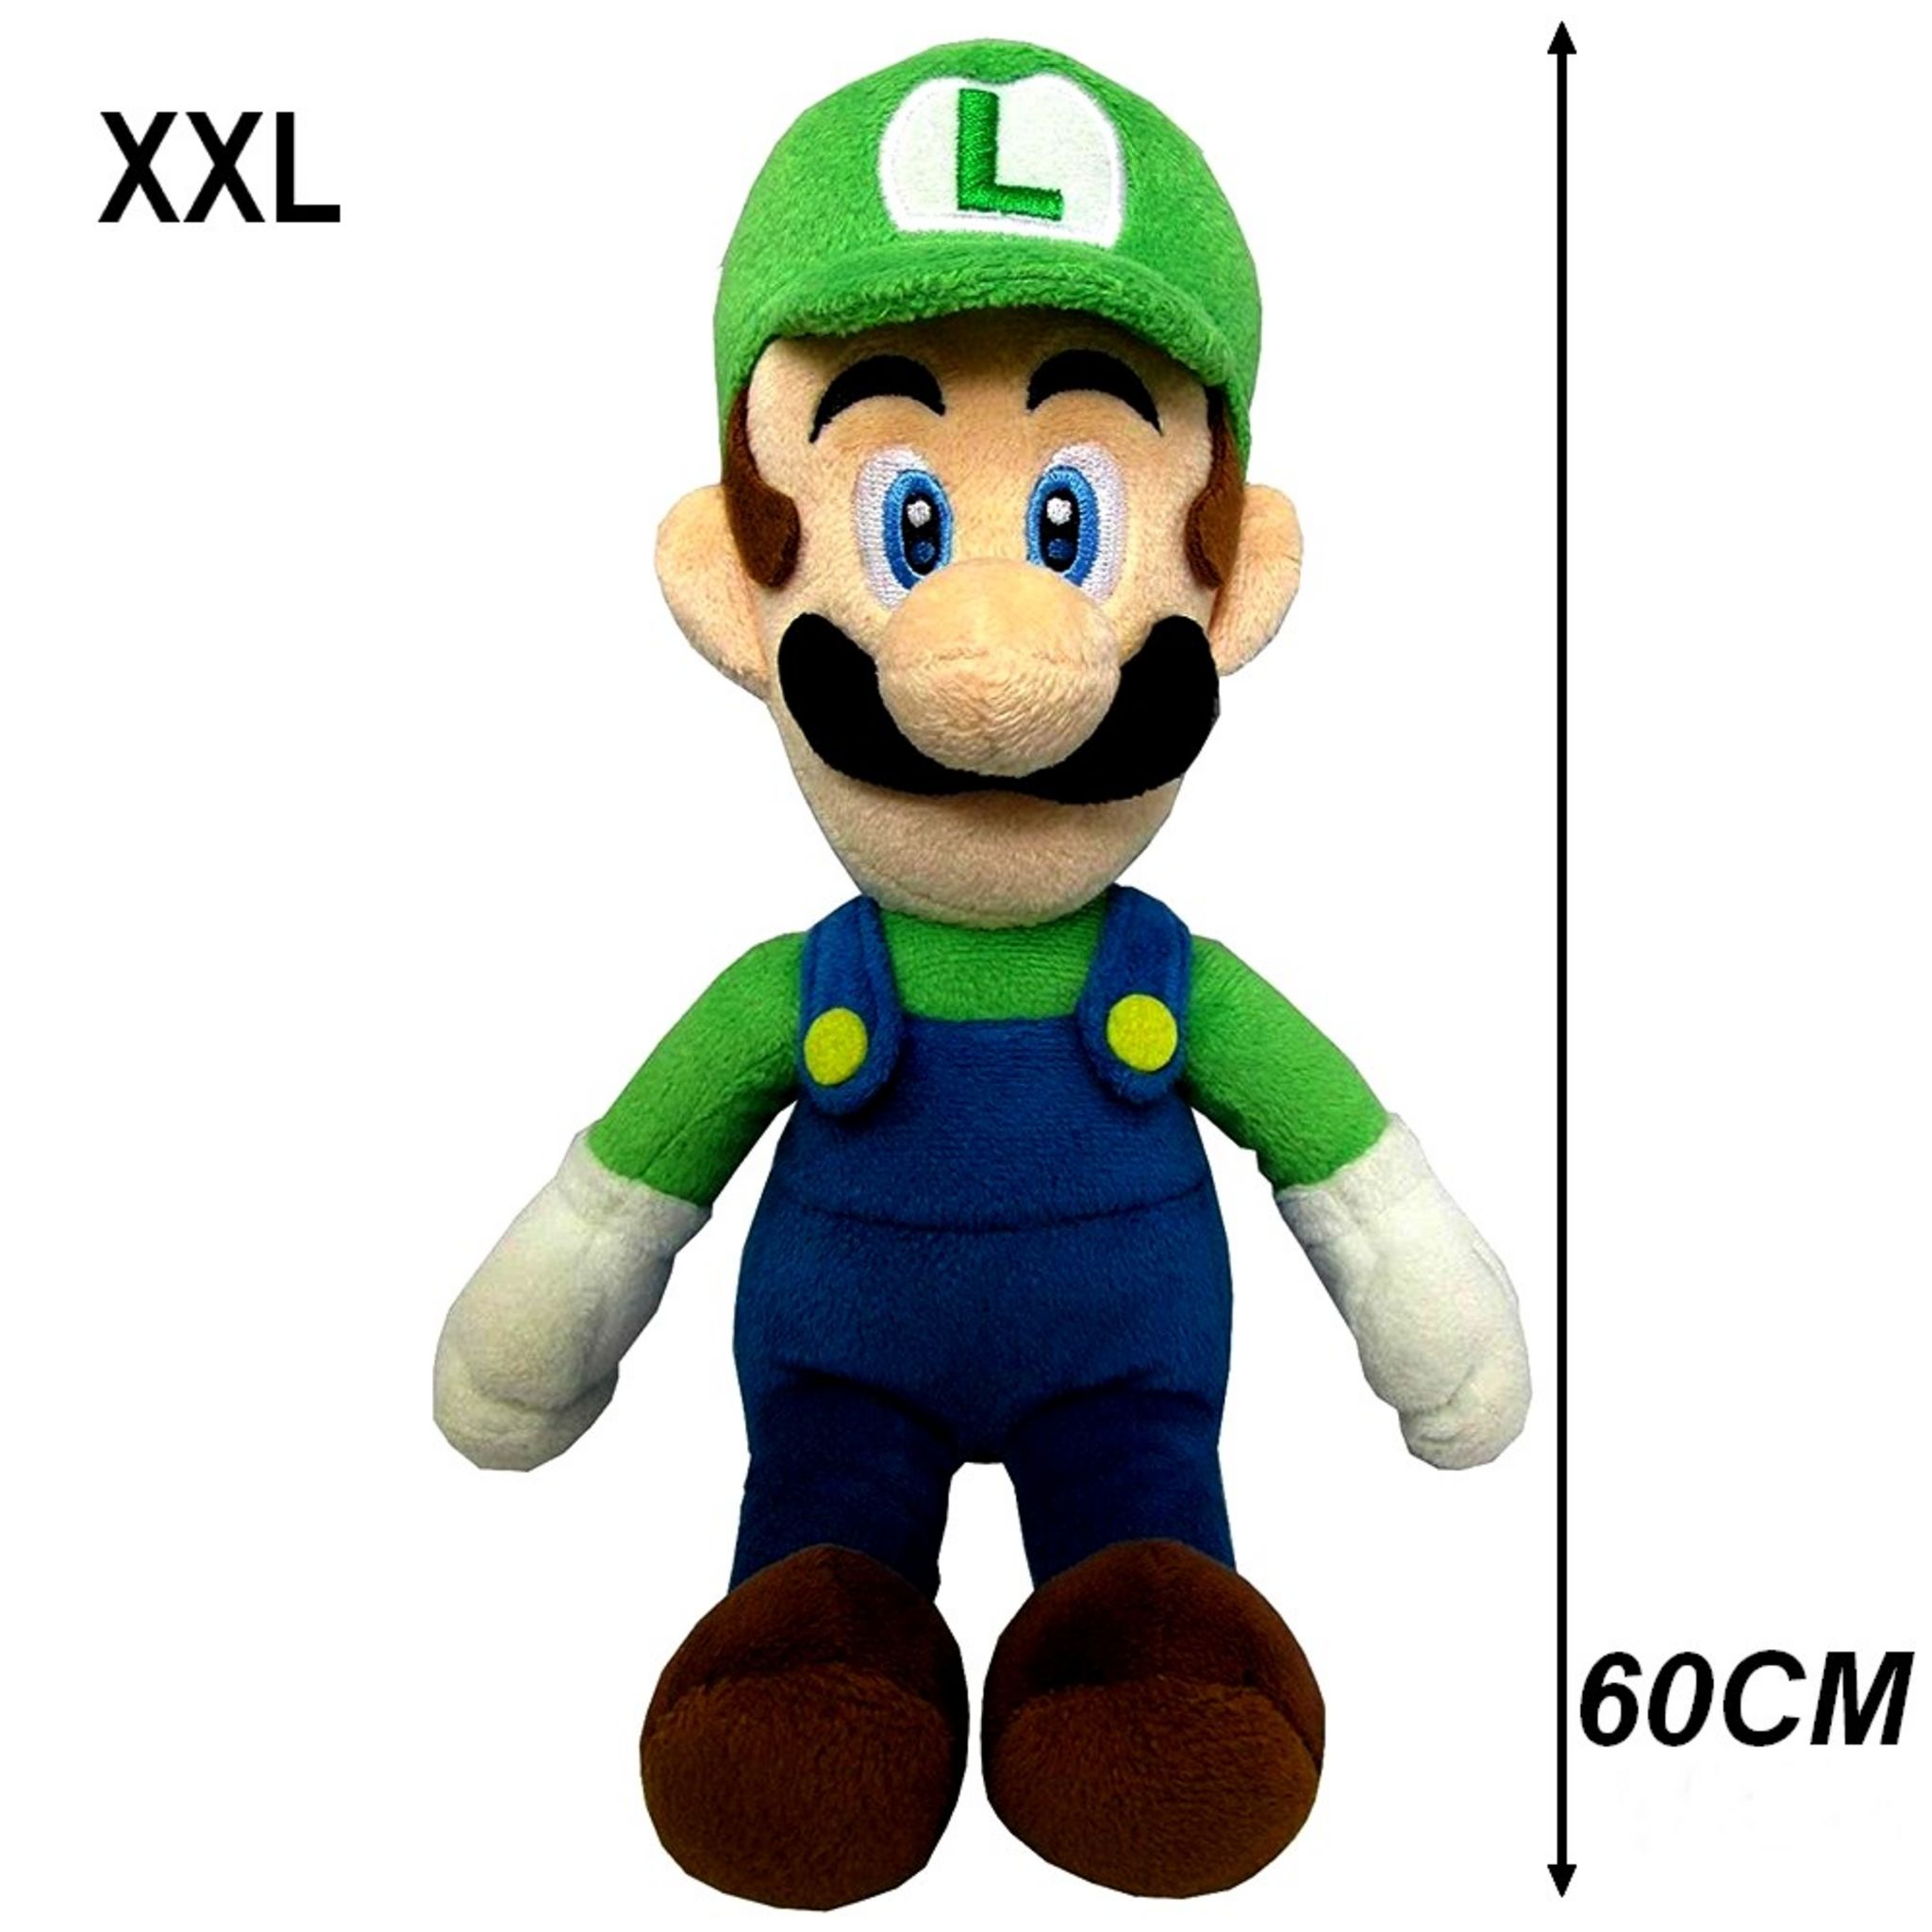 Grande Peluche Luigi Nintendo Mario Bross 60 cm XL pas cher 